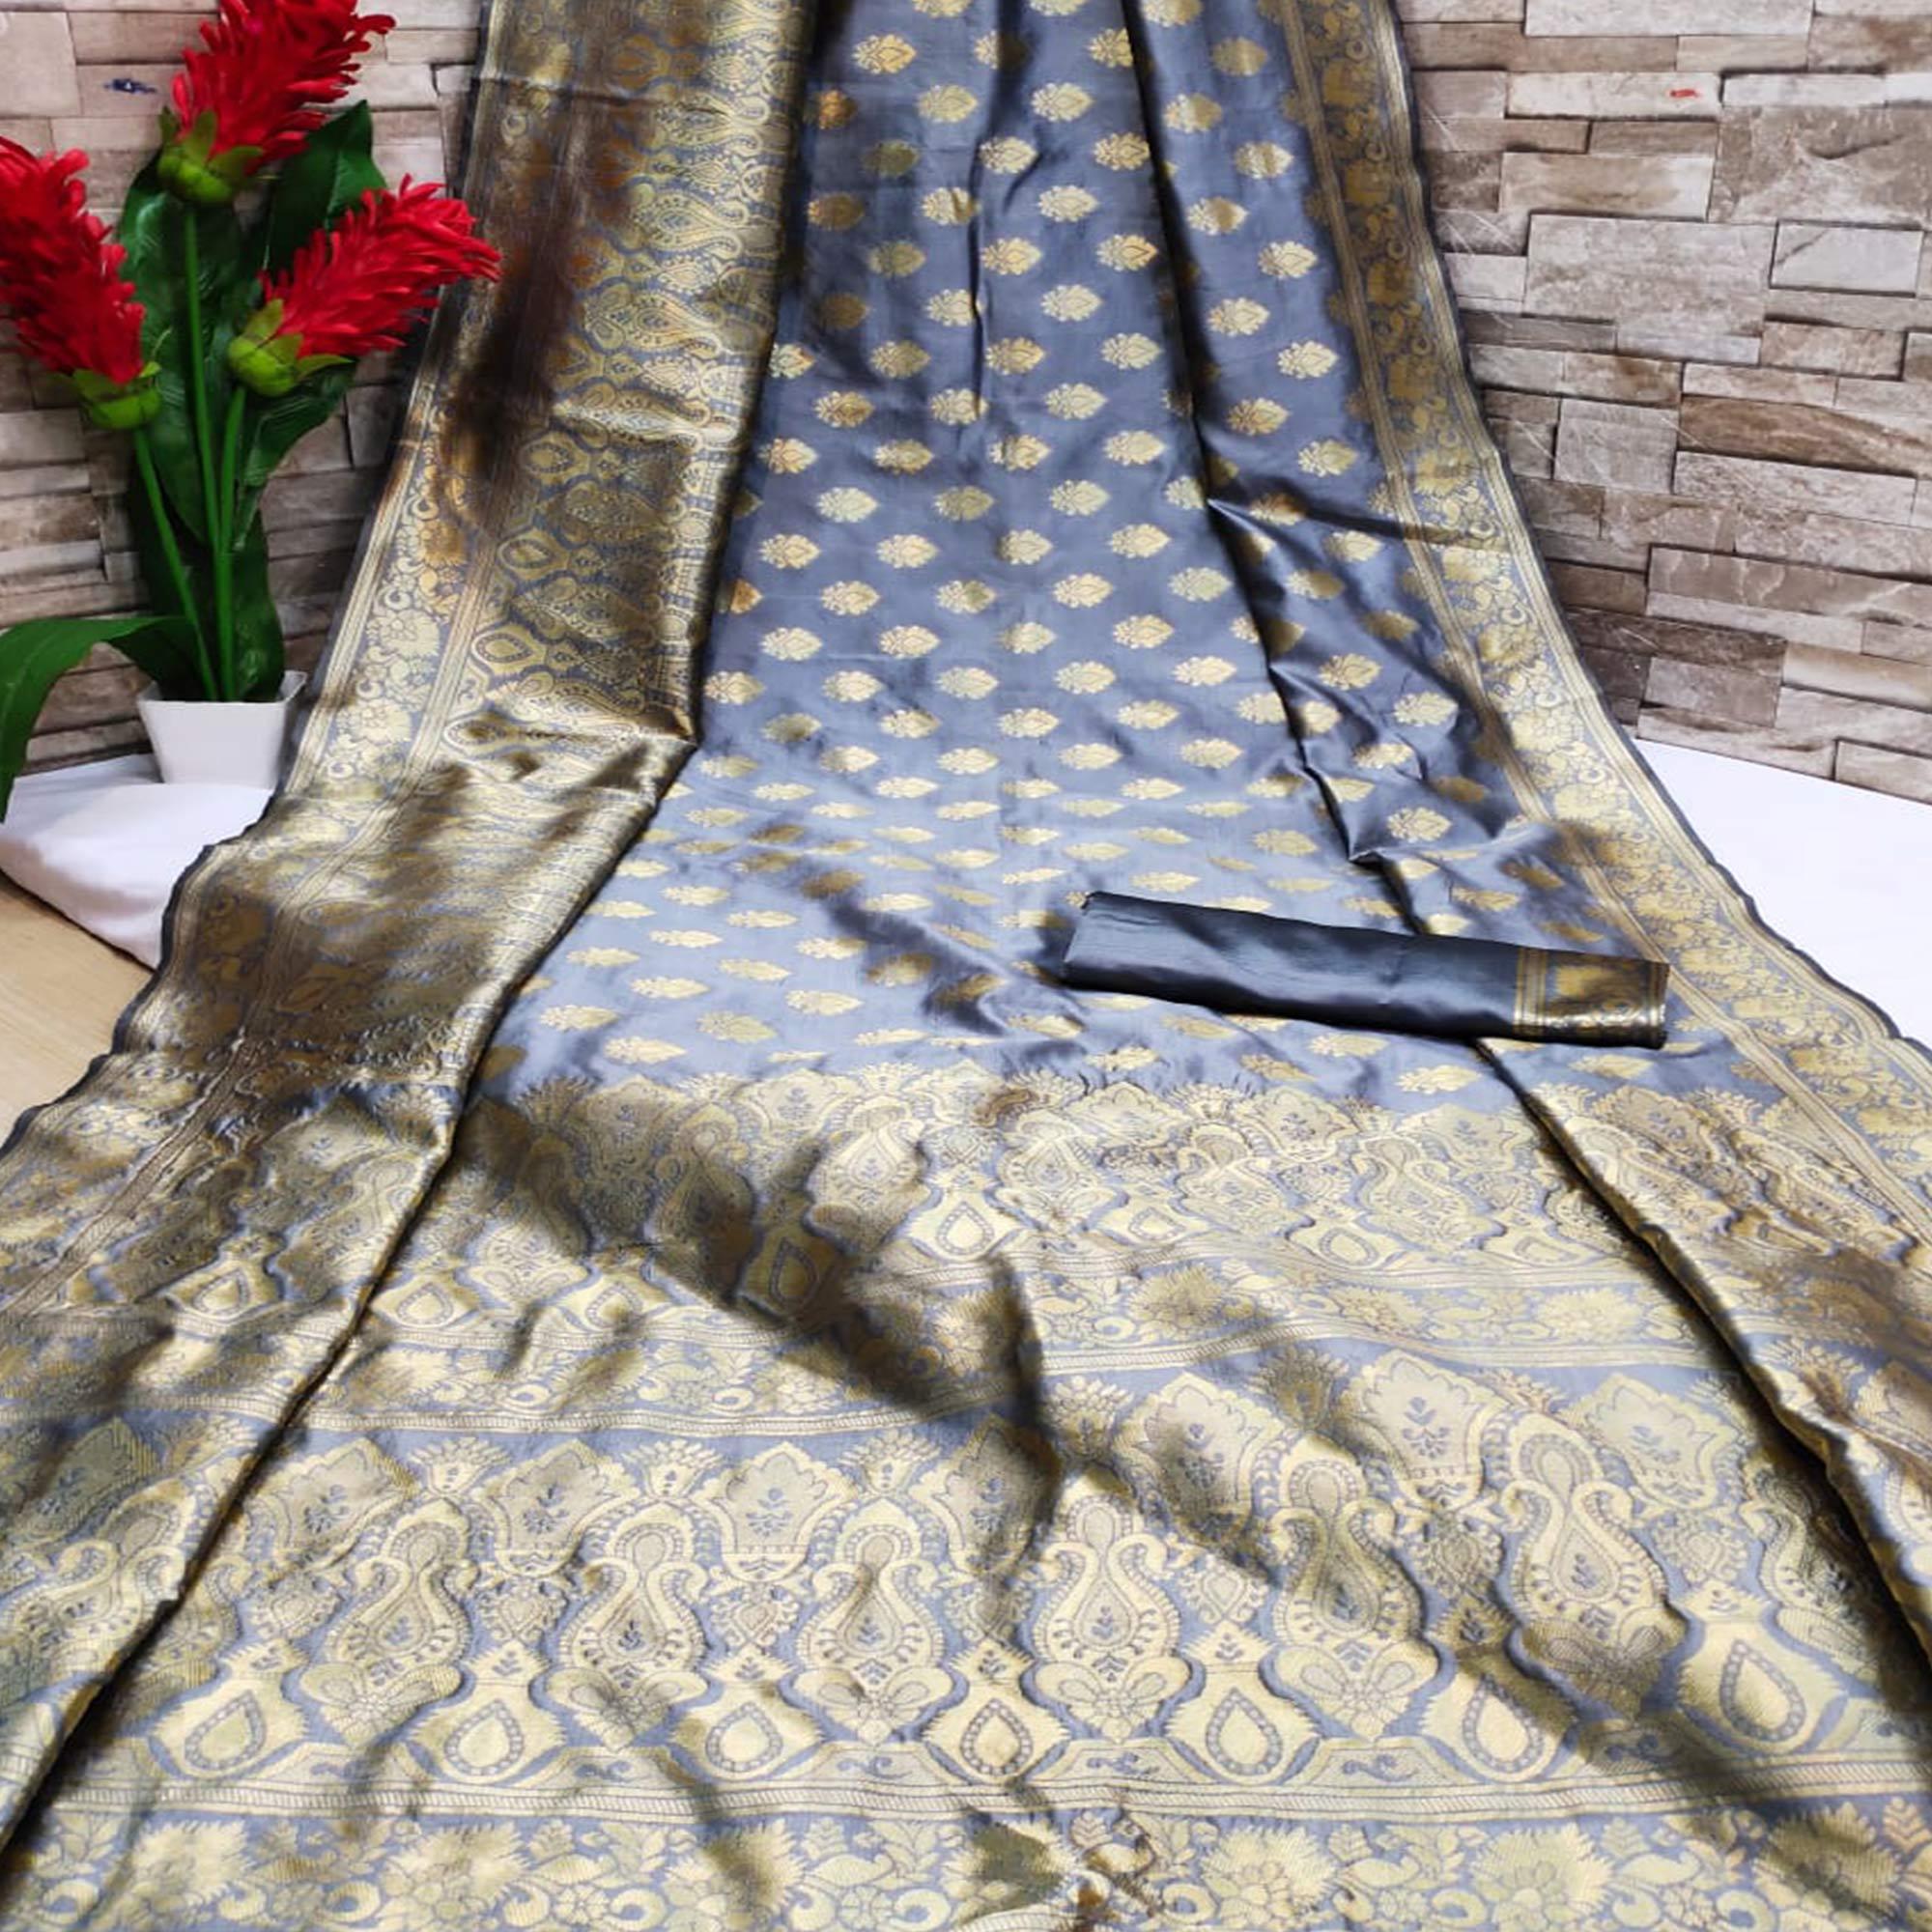 Grey Festive Wear Woven Jacquard Silk Saree - Peachmode